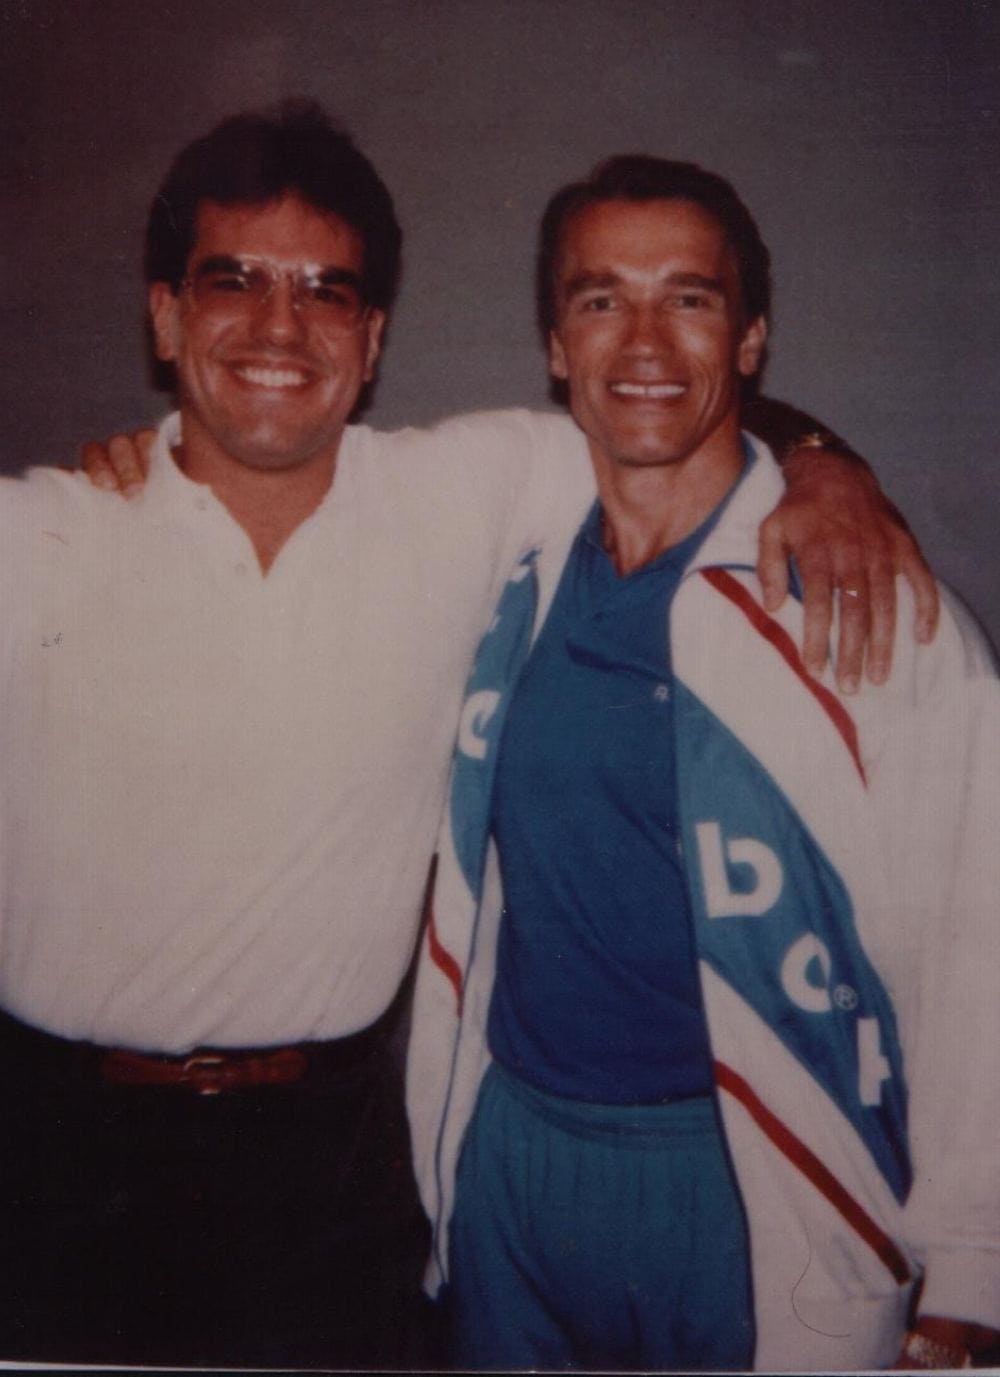 One of the three times that Jim Gurtner has met Arnold Schwarzenegger.